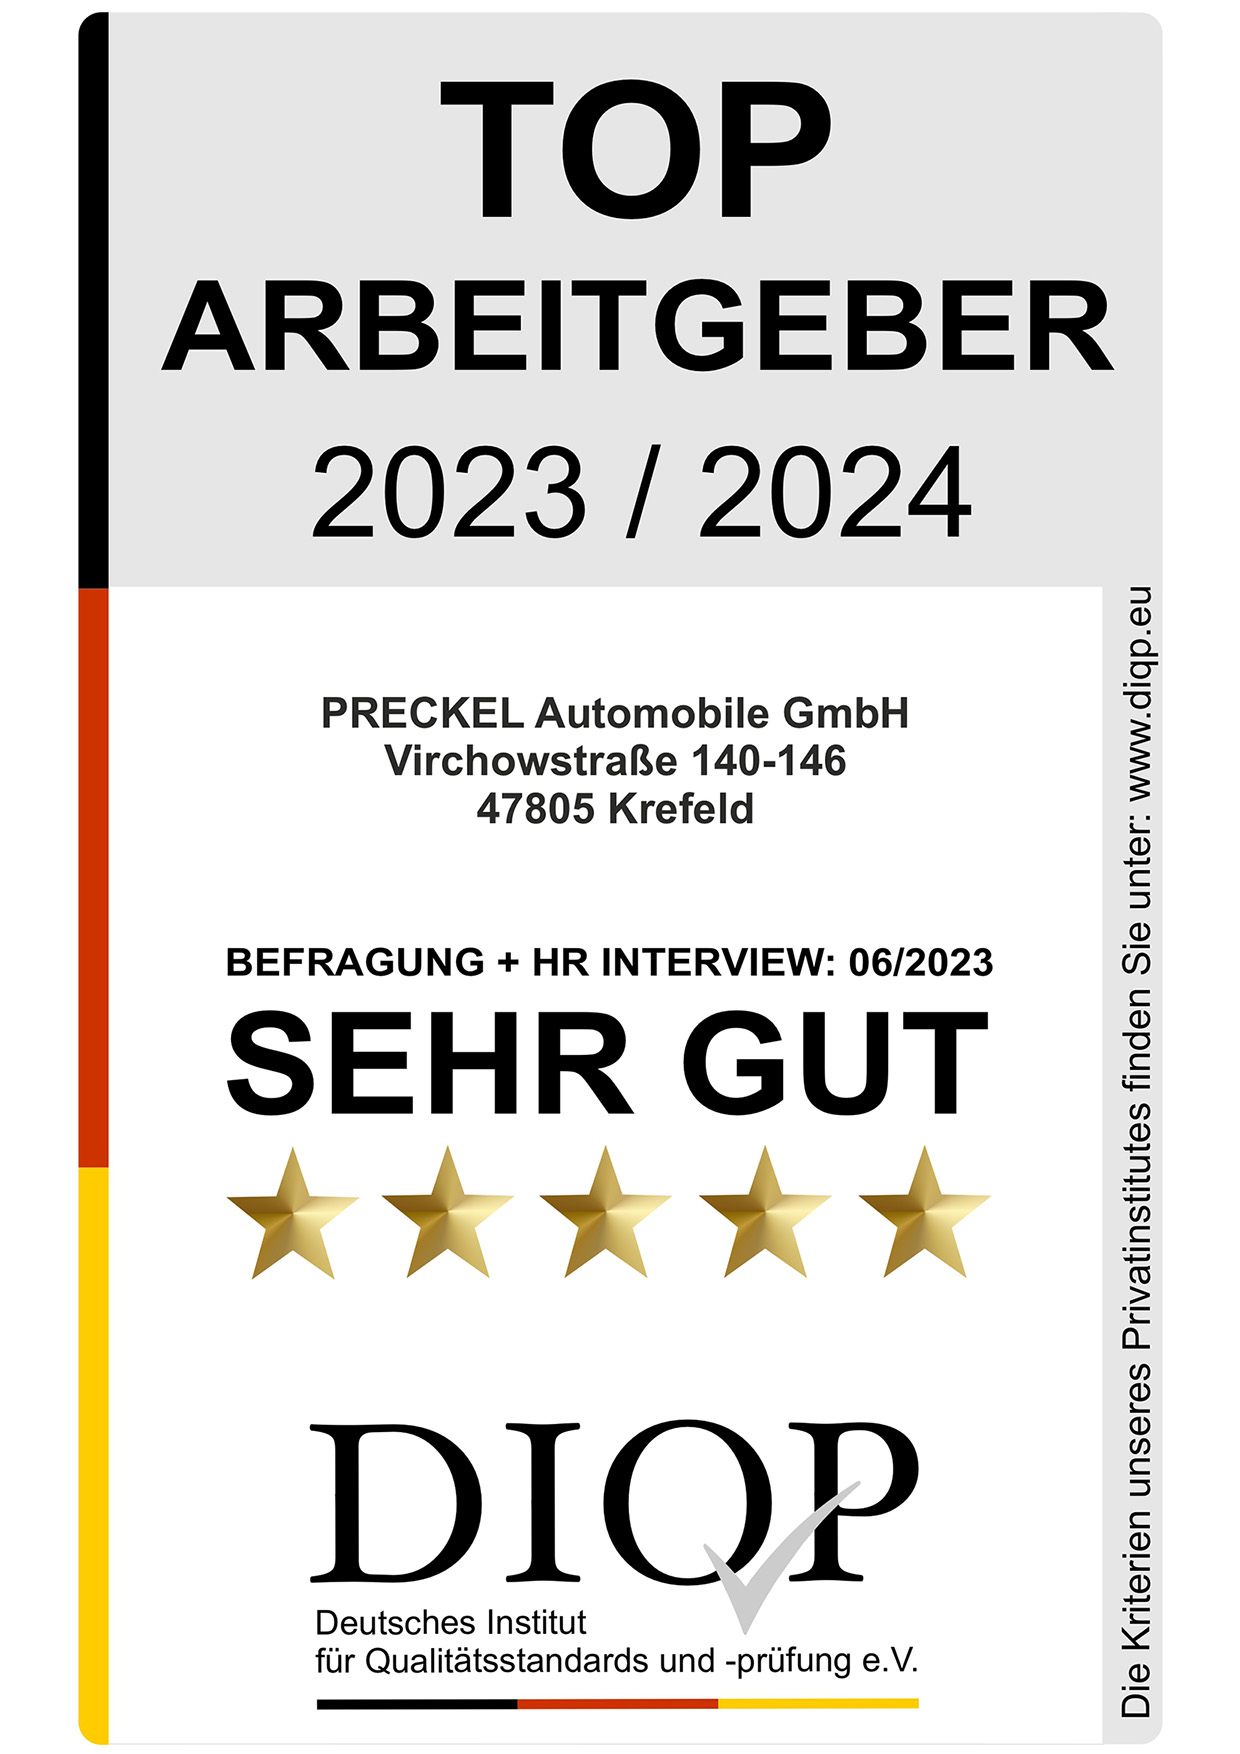 Preckel Automobile GmbH ist Top Arbeitgeber 2023-2024